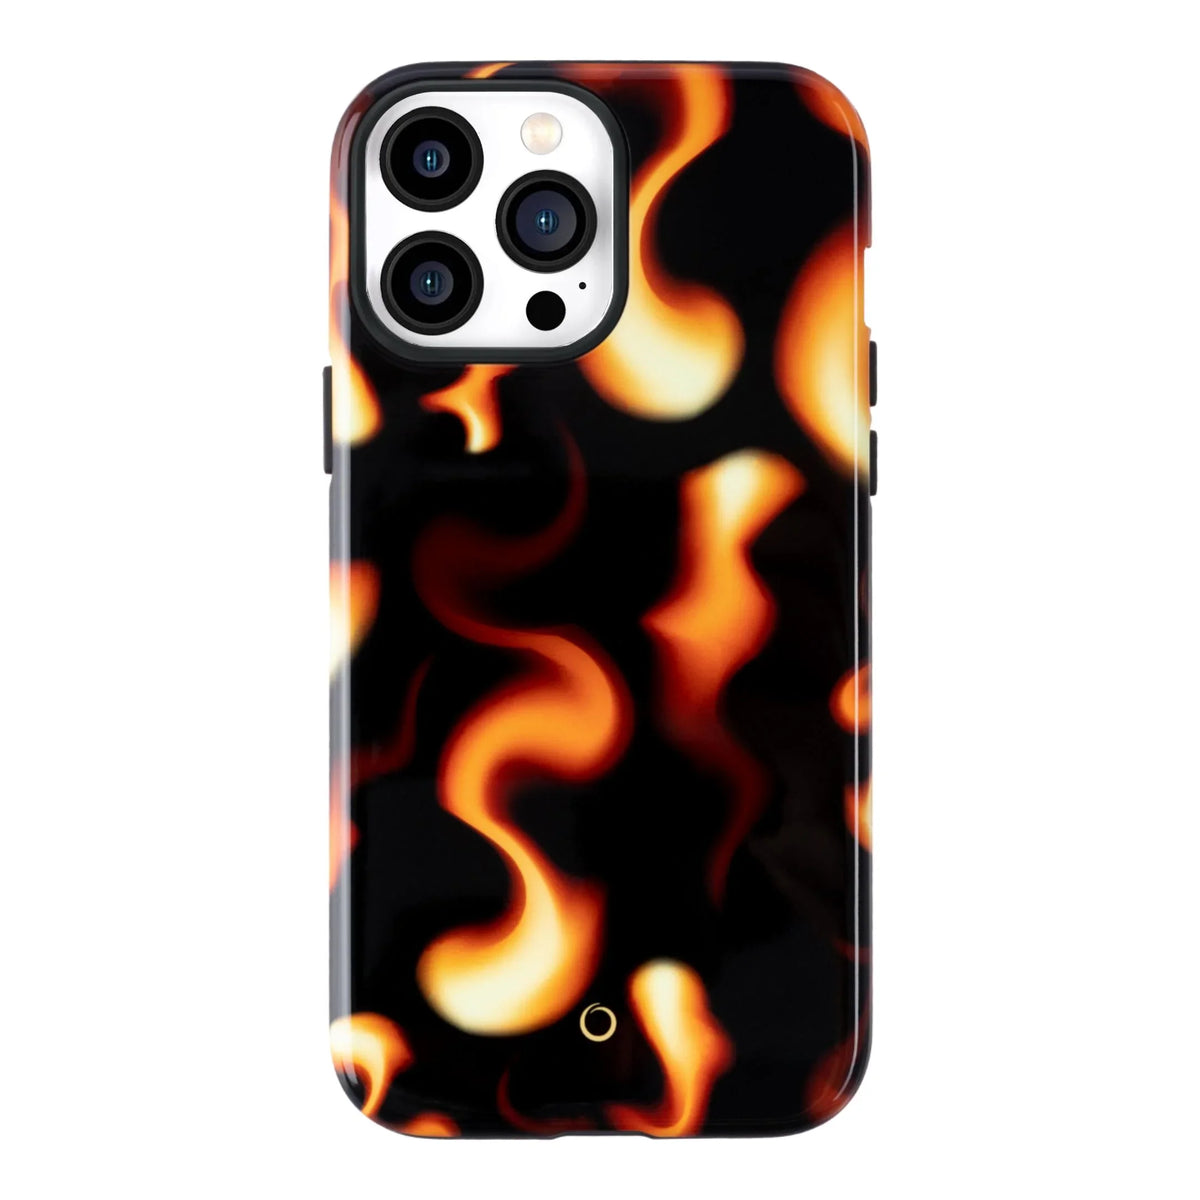 Groovy Orange Flame iPhone Case - iPhone 11 Pro Max